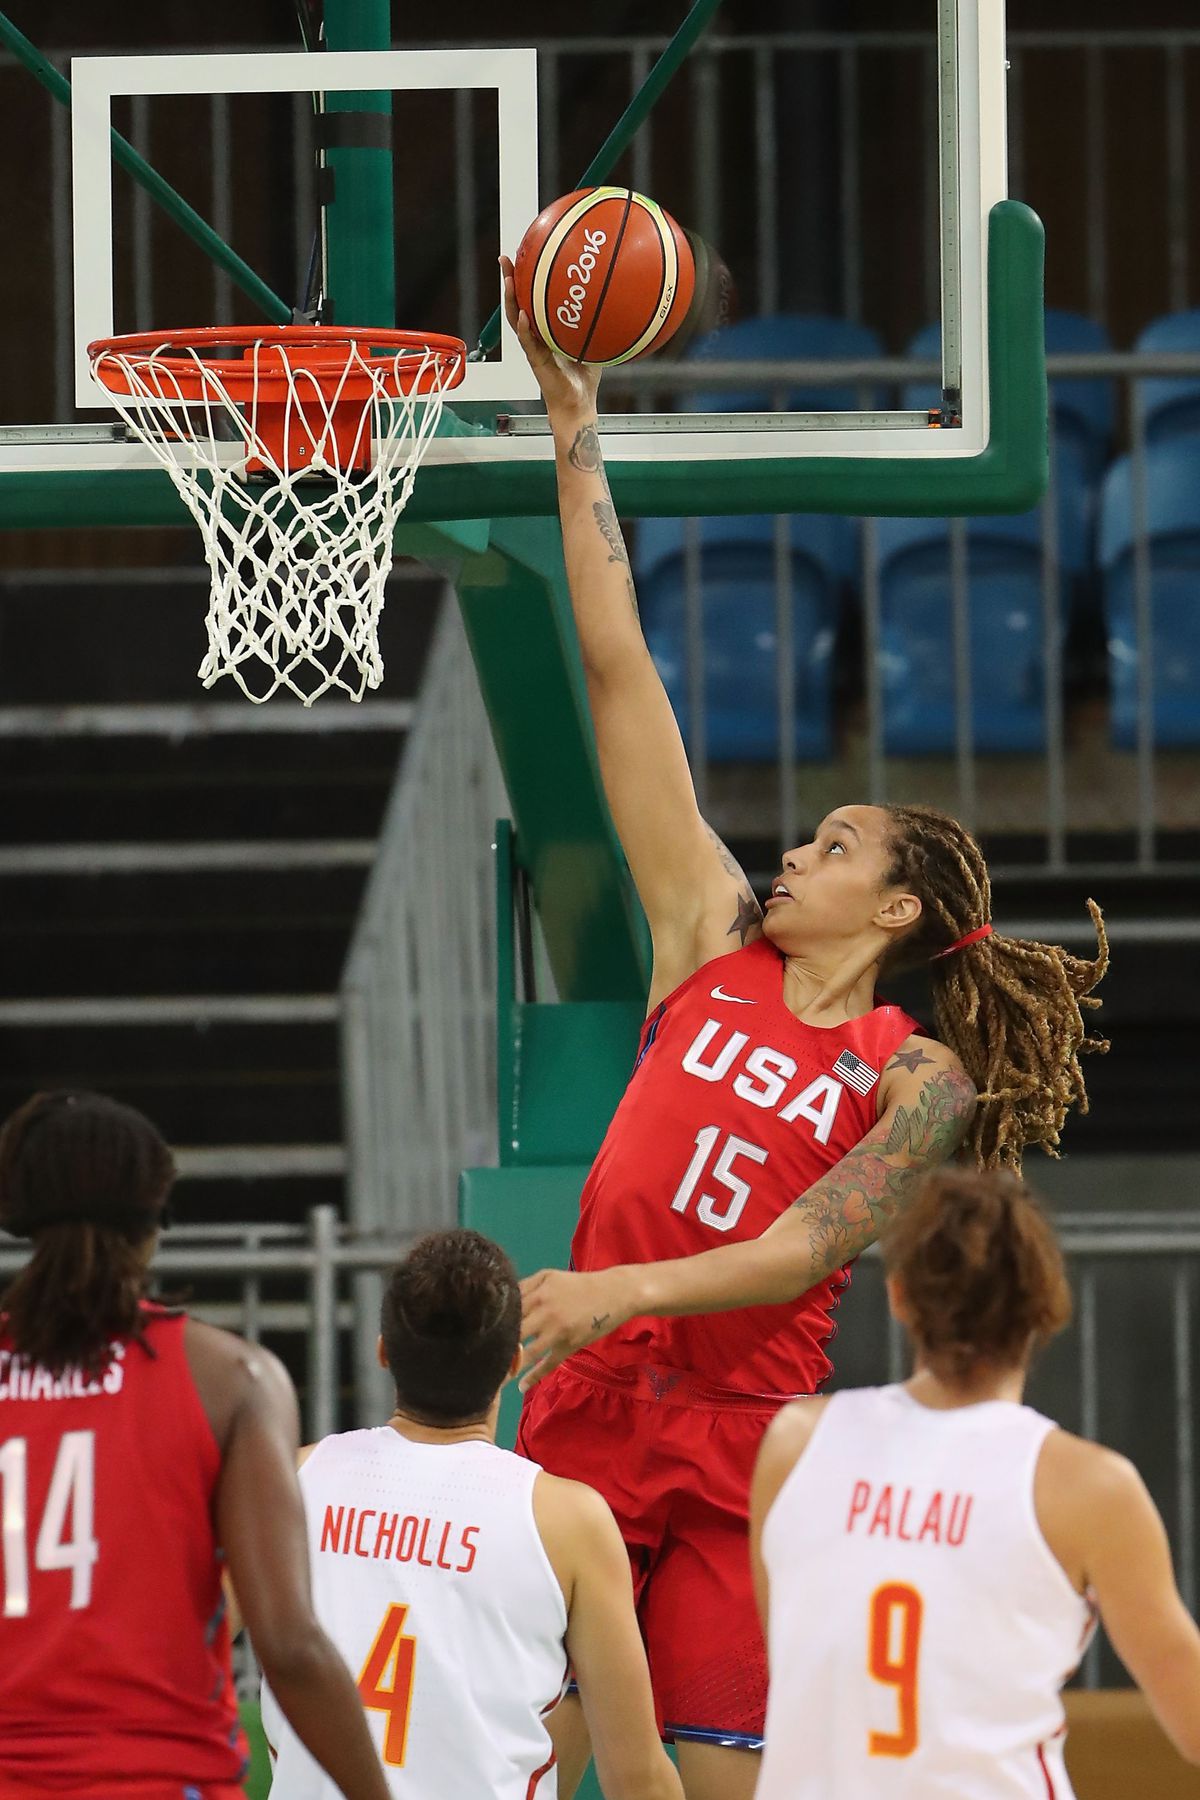 Spain v United States of America - Women's Basketball - Olympics: Day 3